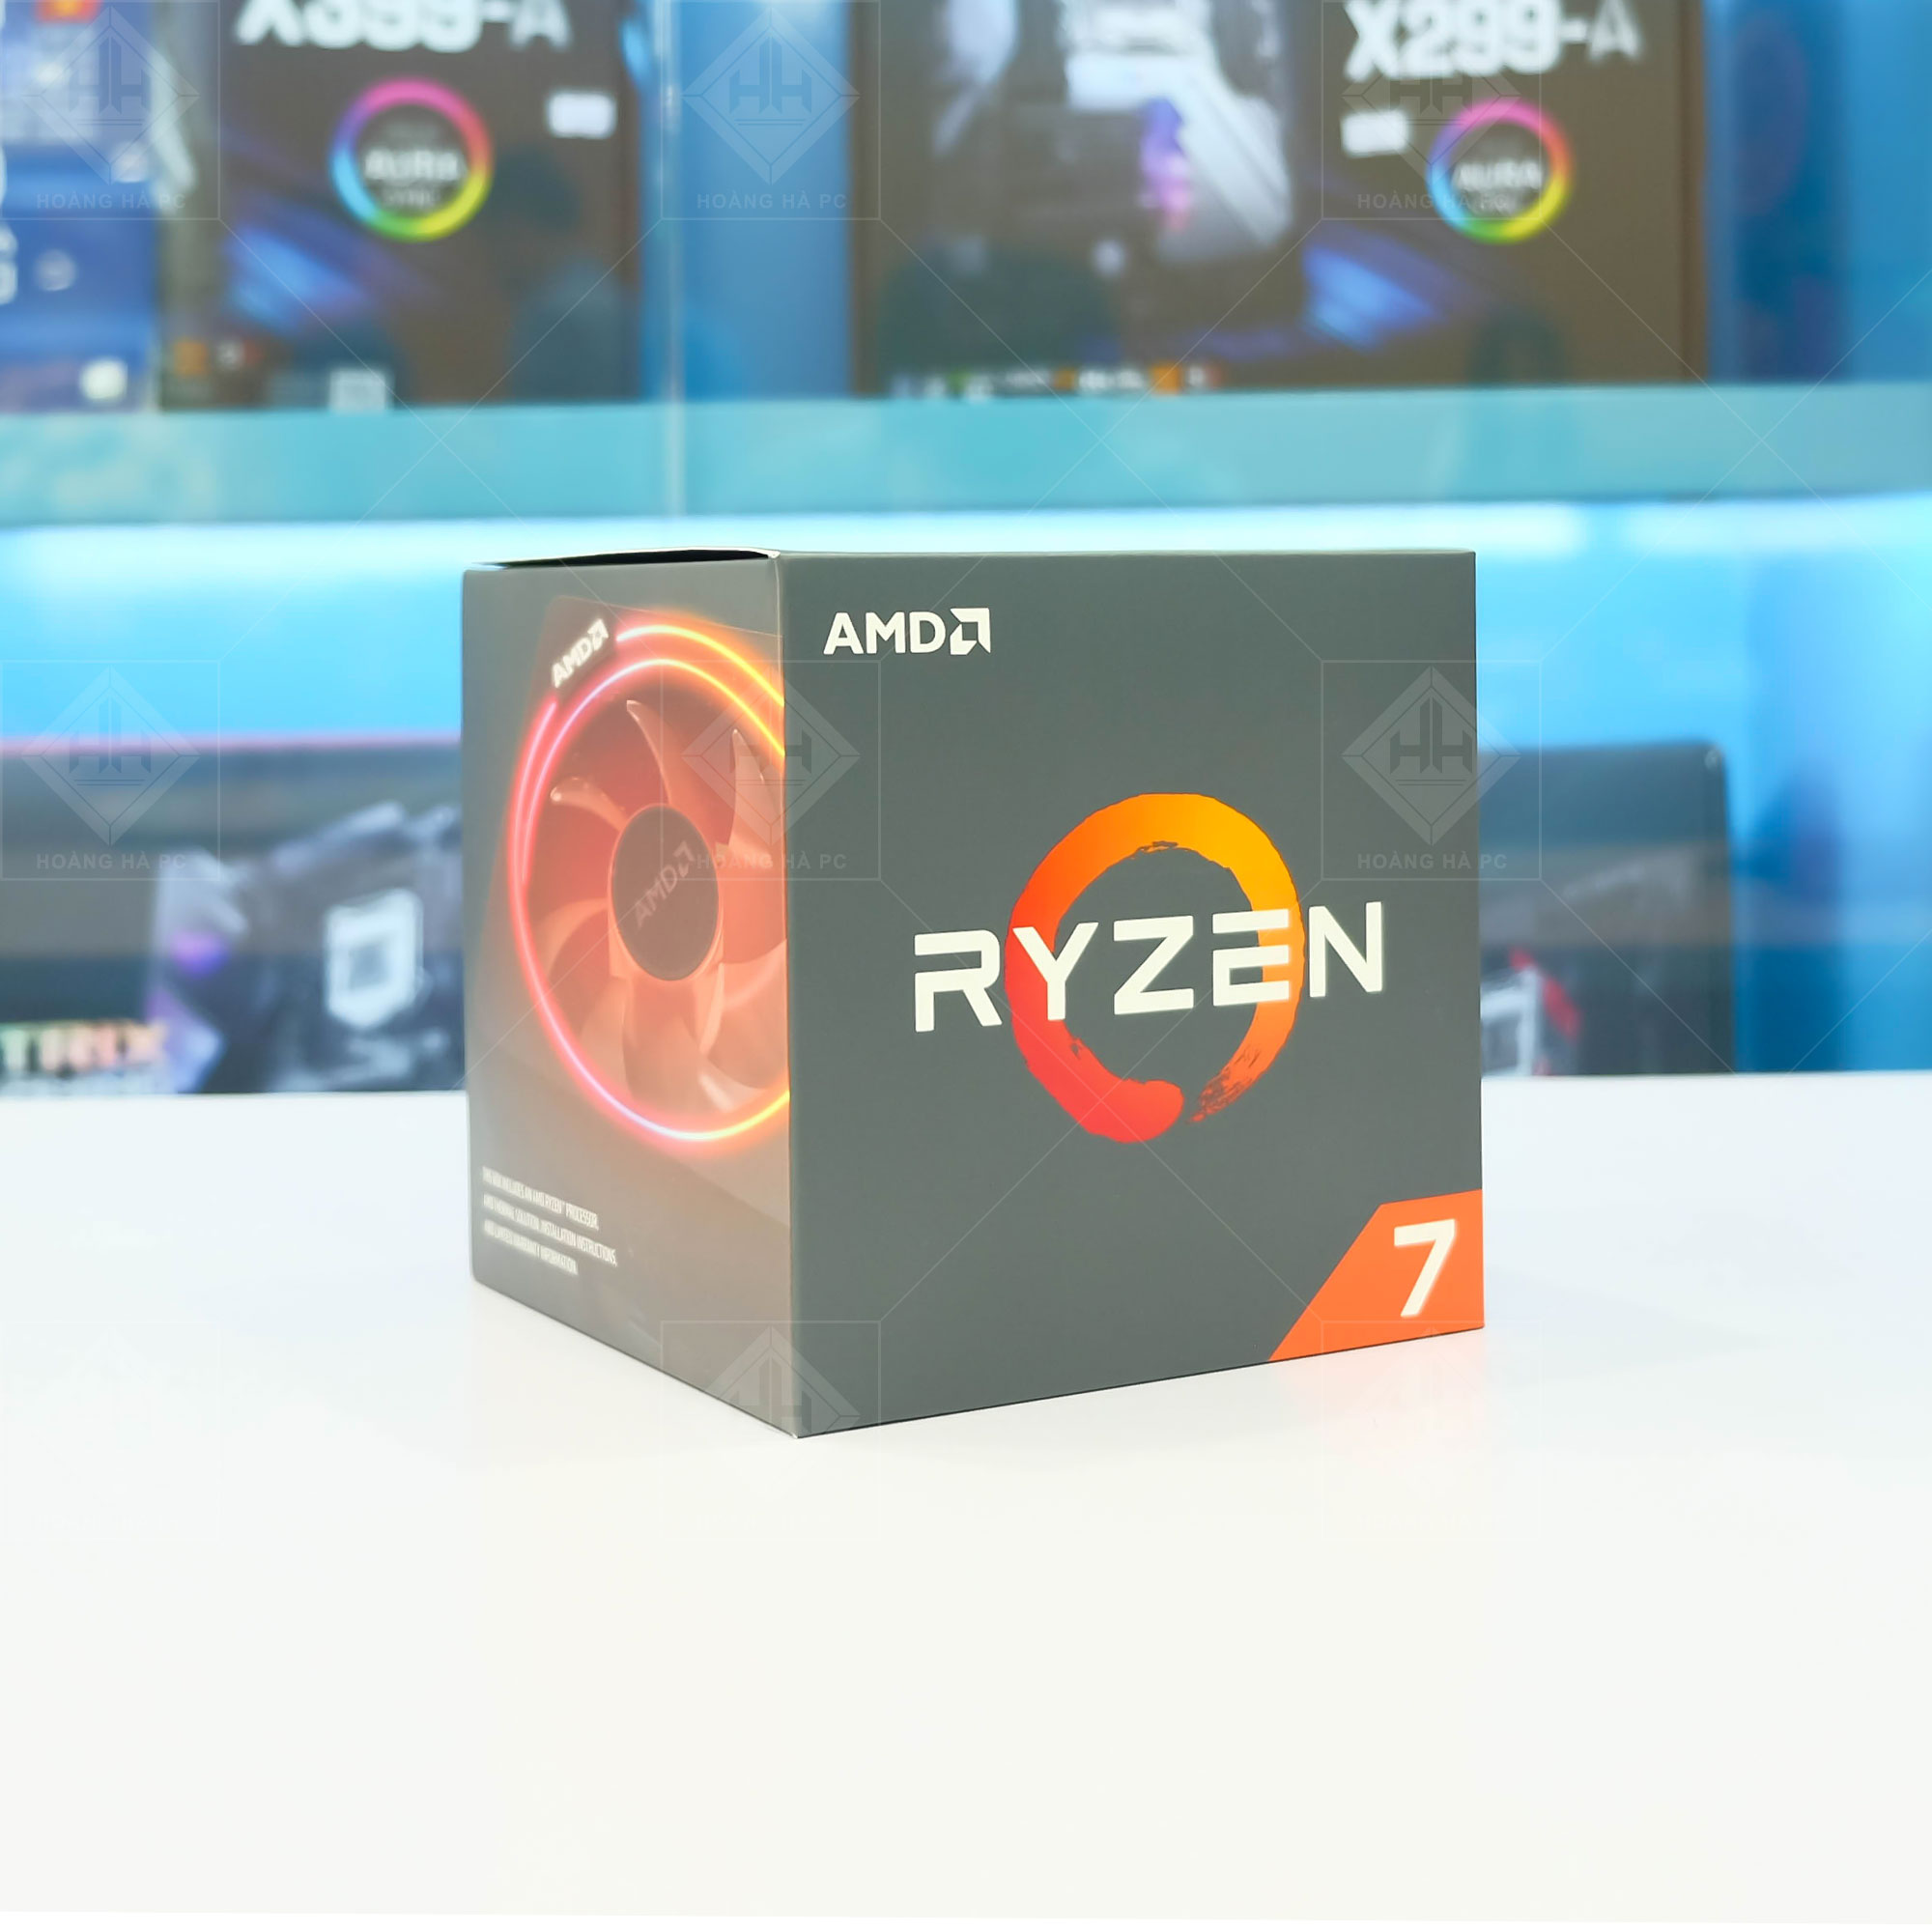 CPU AMD Ryzen 7 2700 3.2 GHz (4.1 GHz Turbo) / 20MB / 8 cores 16 threads / socket AM4